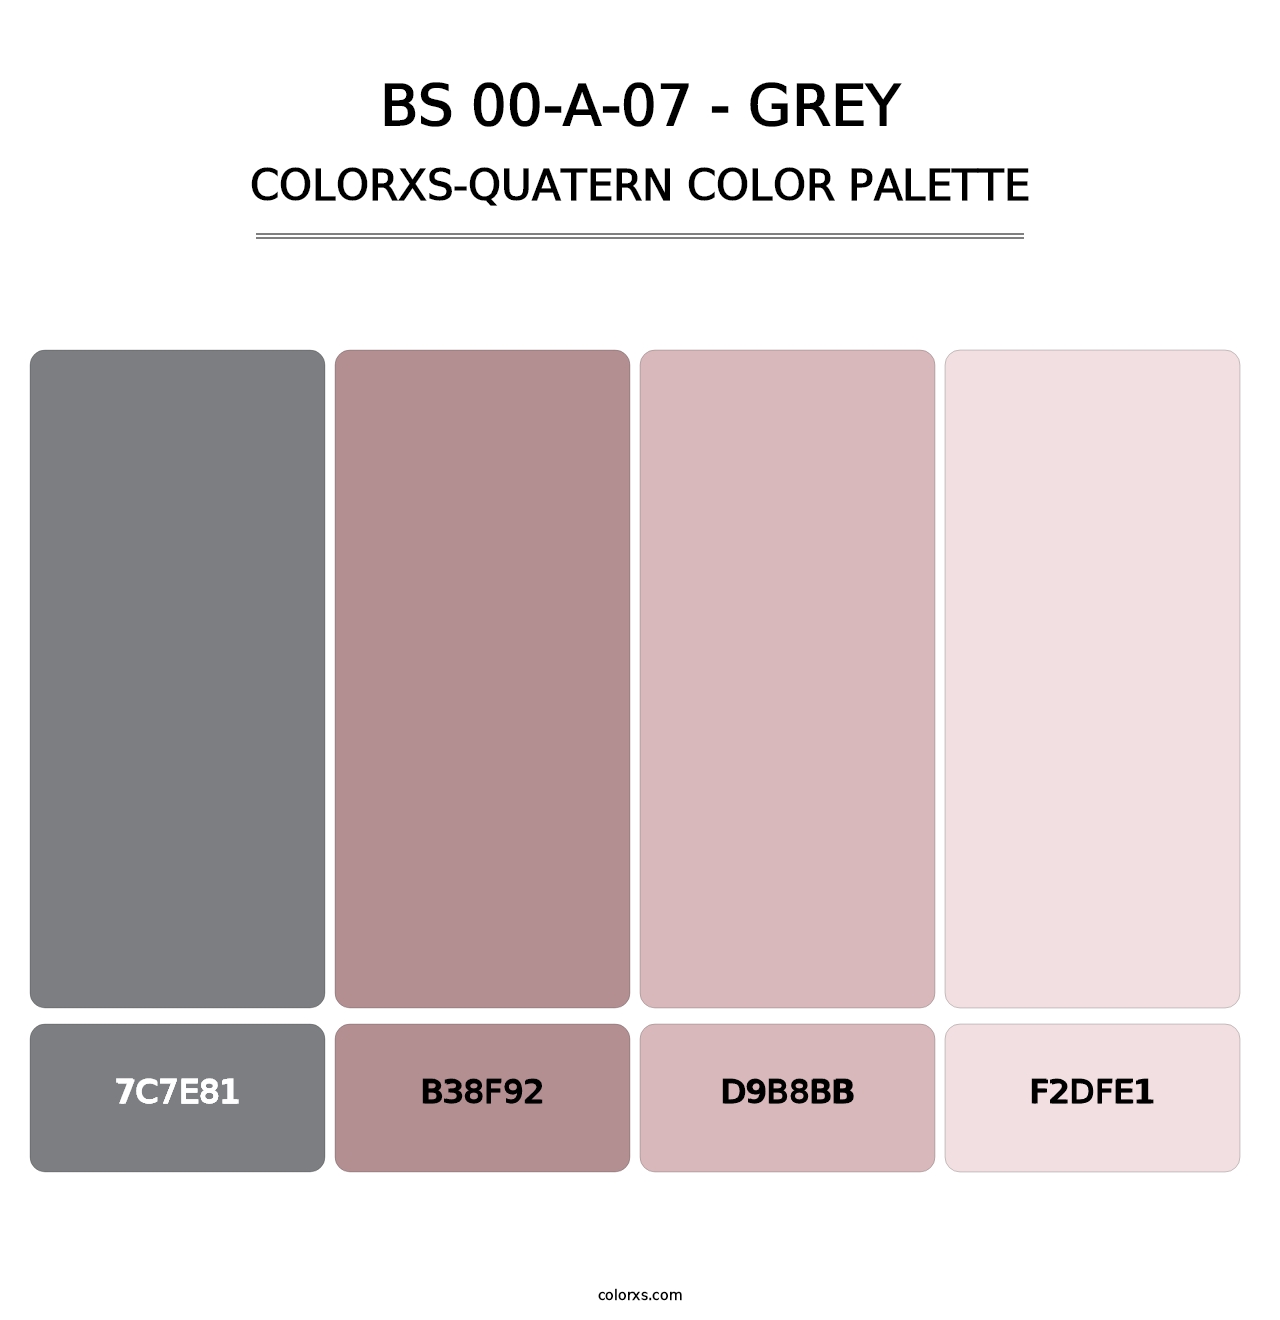 BS 00-A-07 - Grey - Colorxs Quatern Palette